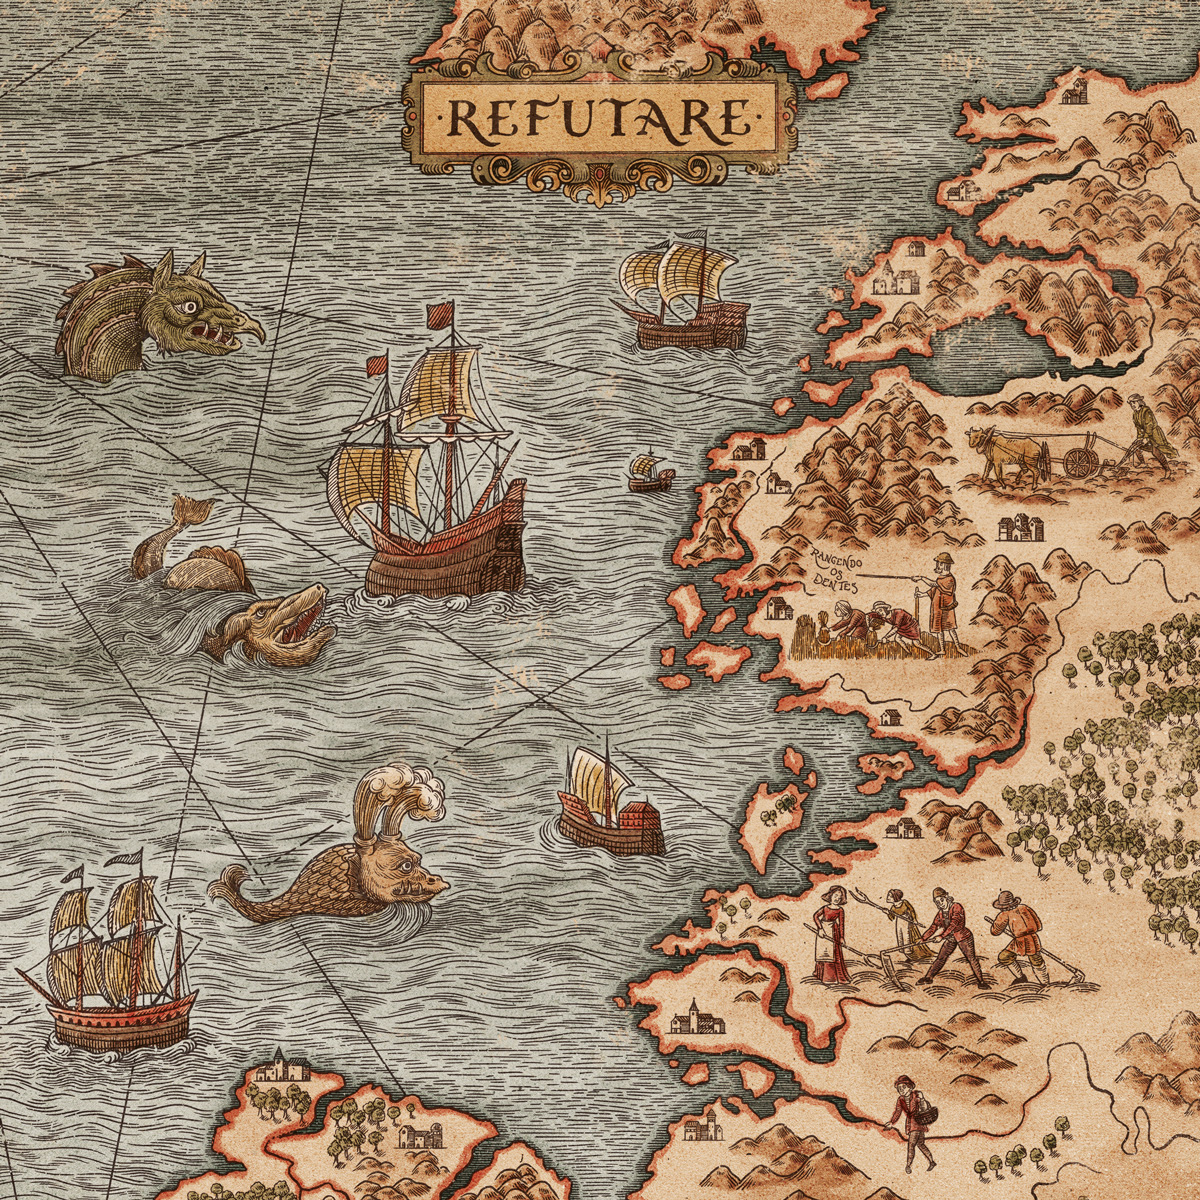 map medieval Renaissance sea monster hetching